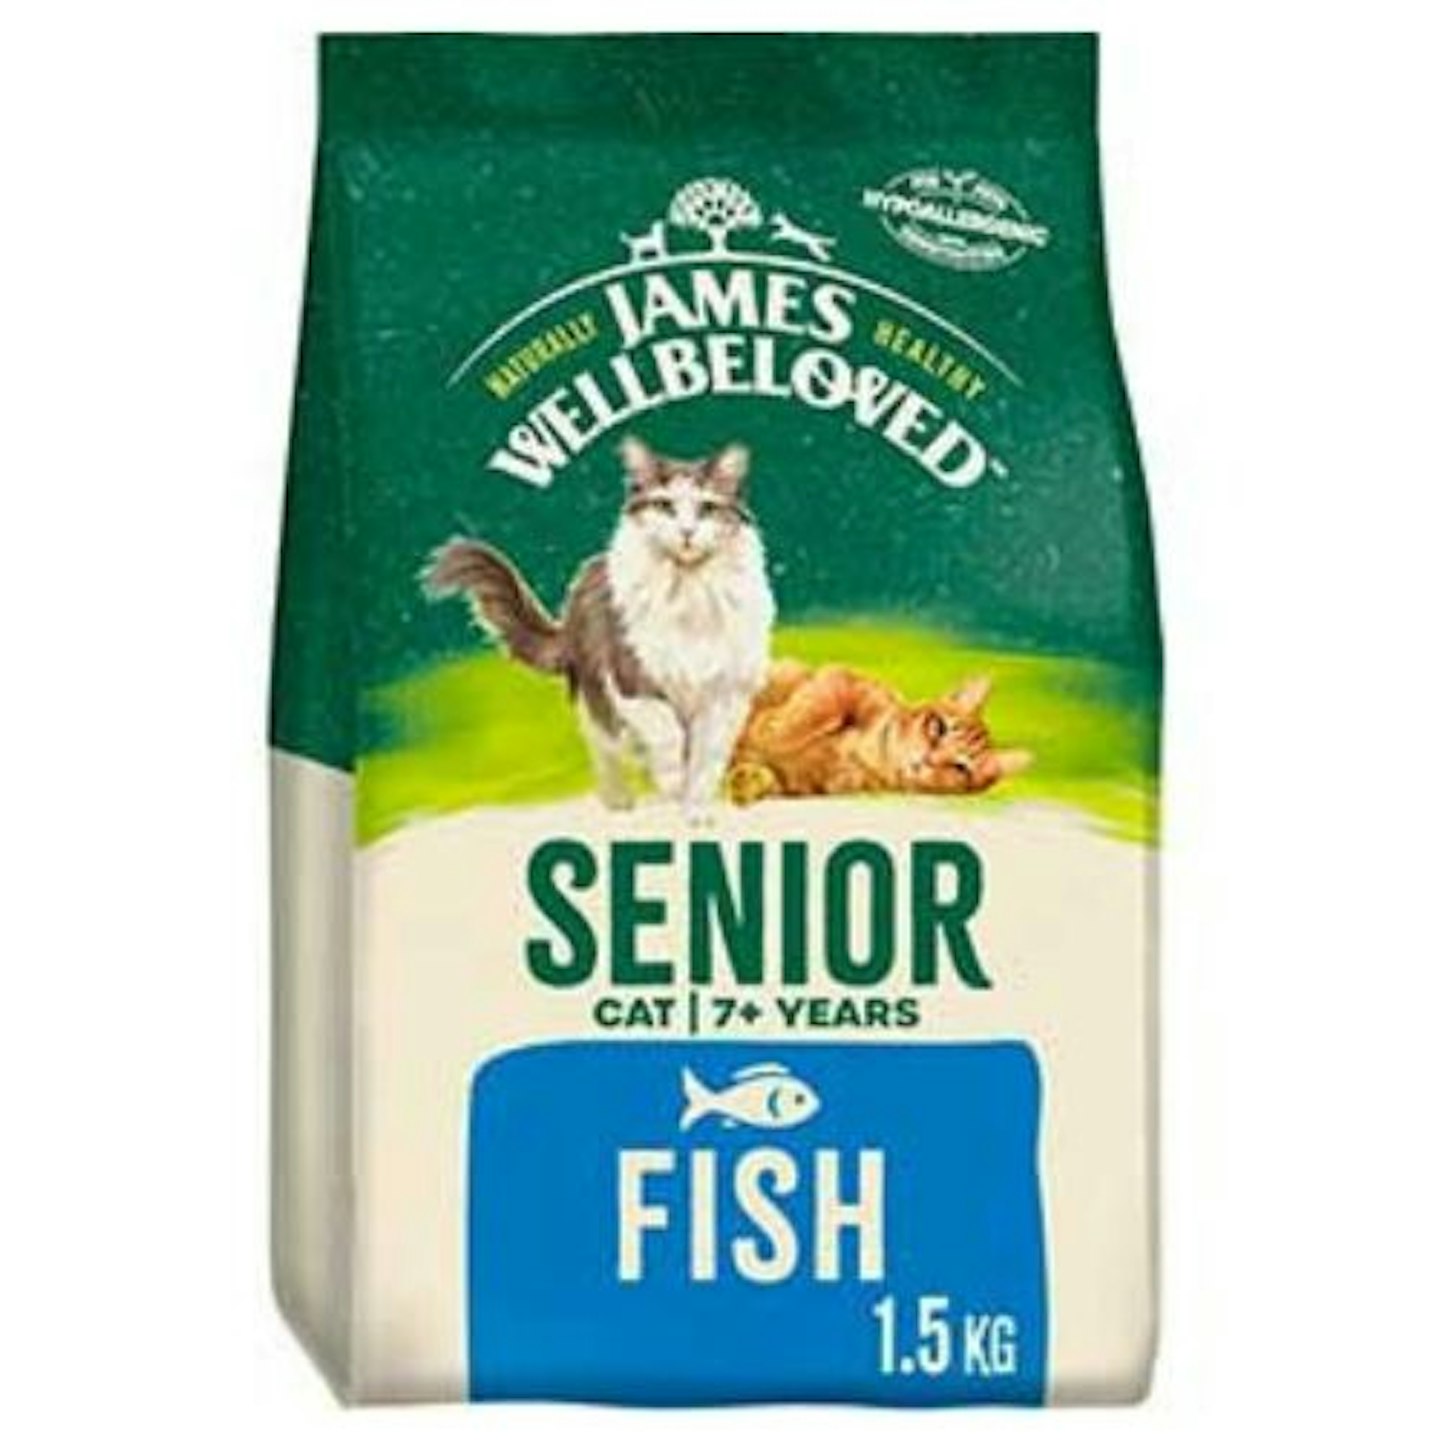  James Wellbeloved, Dry Senior Cat Food Fish